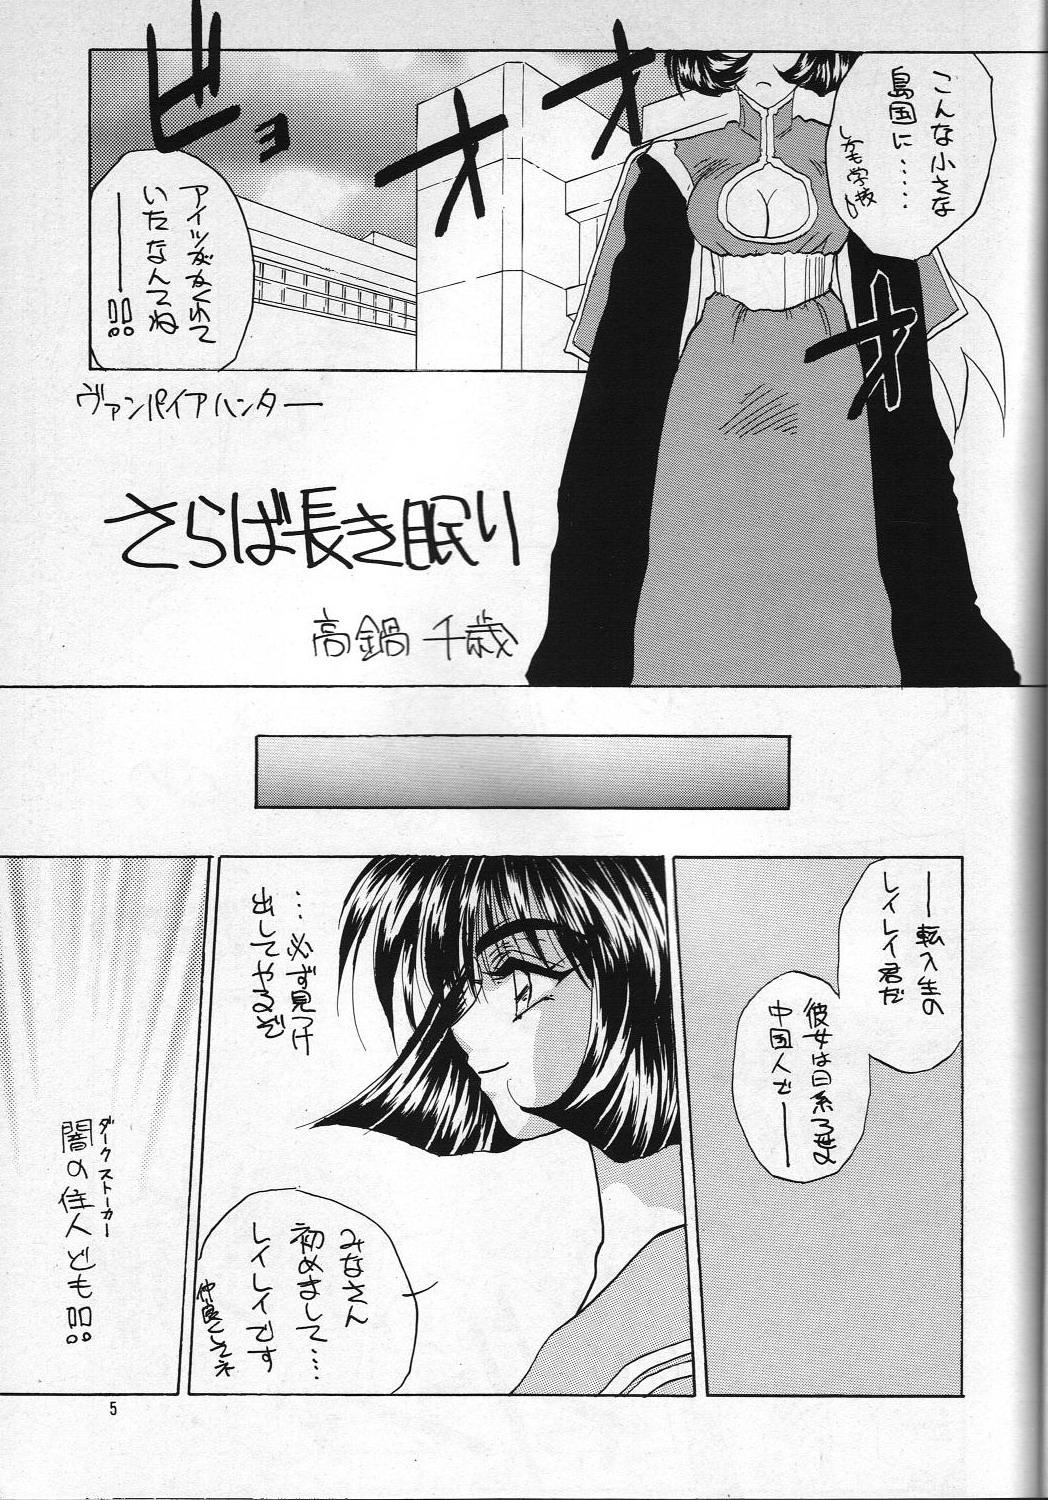 Pretty H VOLUME 1 - Ah my goddess Darkstalkers Fushigi no umi no nadia Sonic soldier borgman Bastard Idol densetsu eriko Stream - Page 4